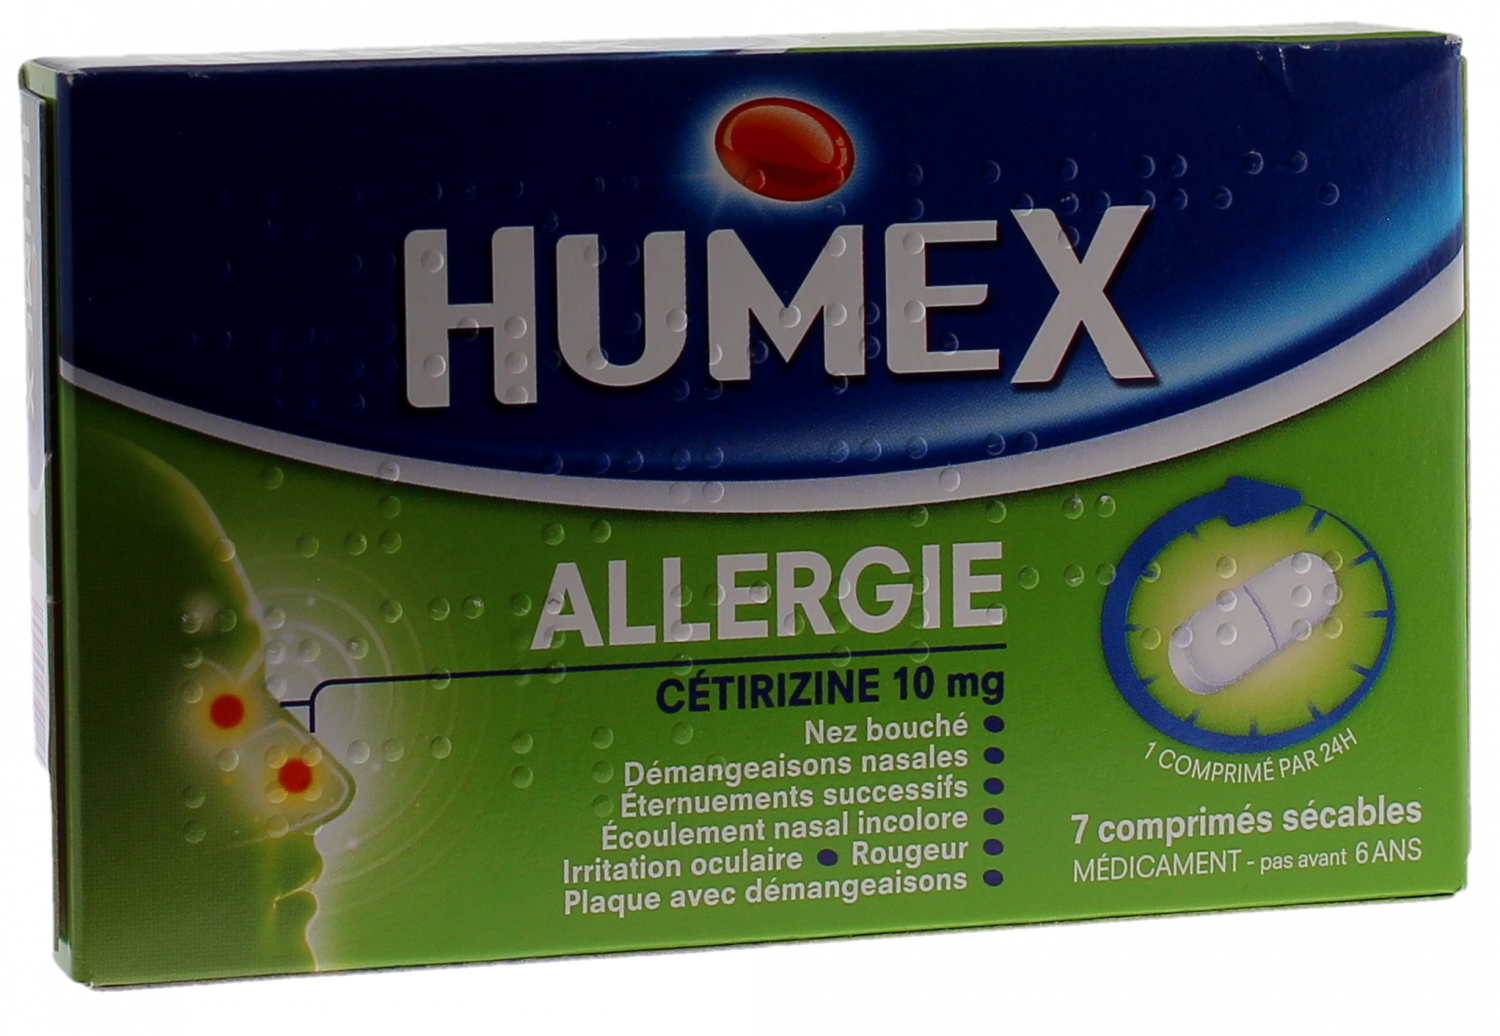 Humex allergie cétirizine 10mg, 7 comprimés pelliculés sécables